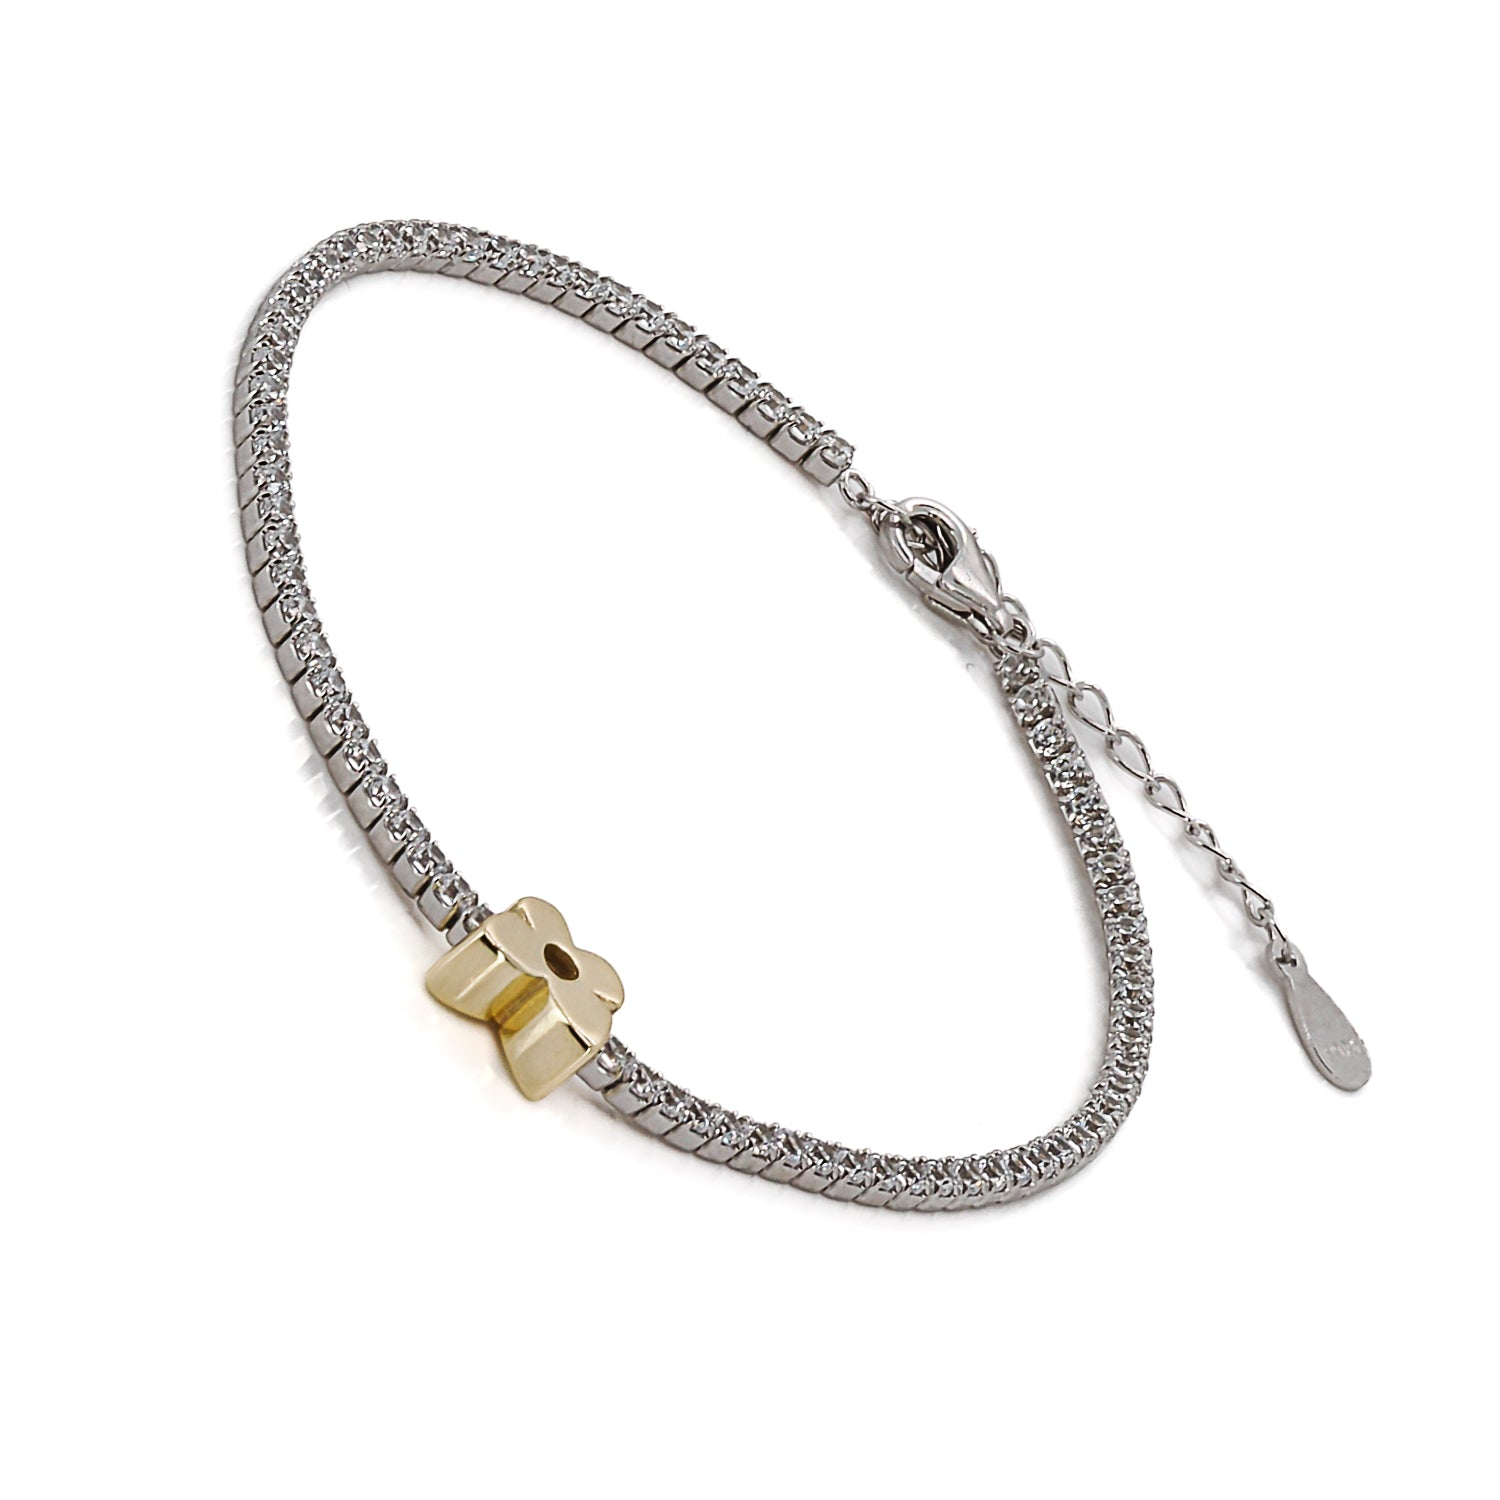 Shimmering zircon stones: Gold Butterfly Bracelet's allure.